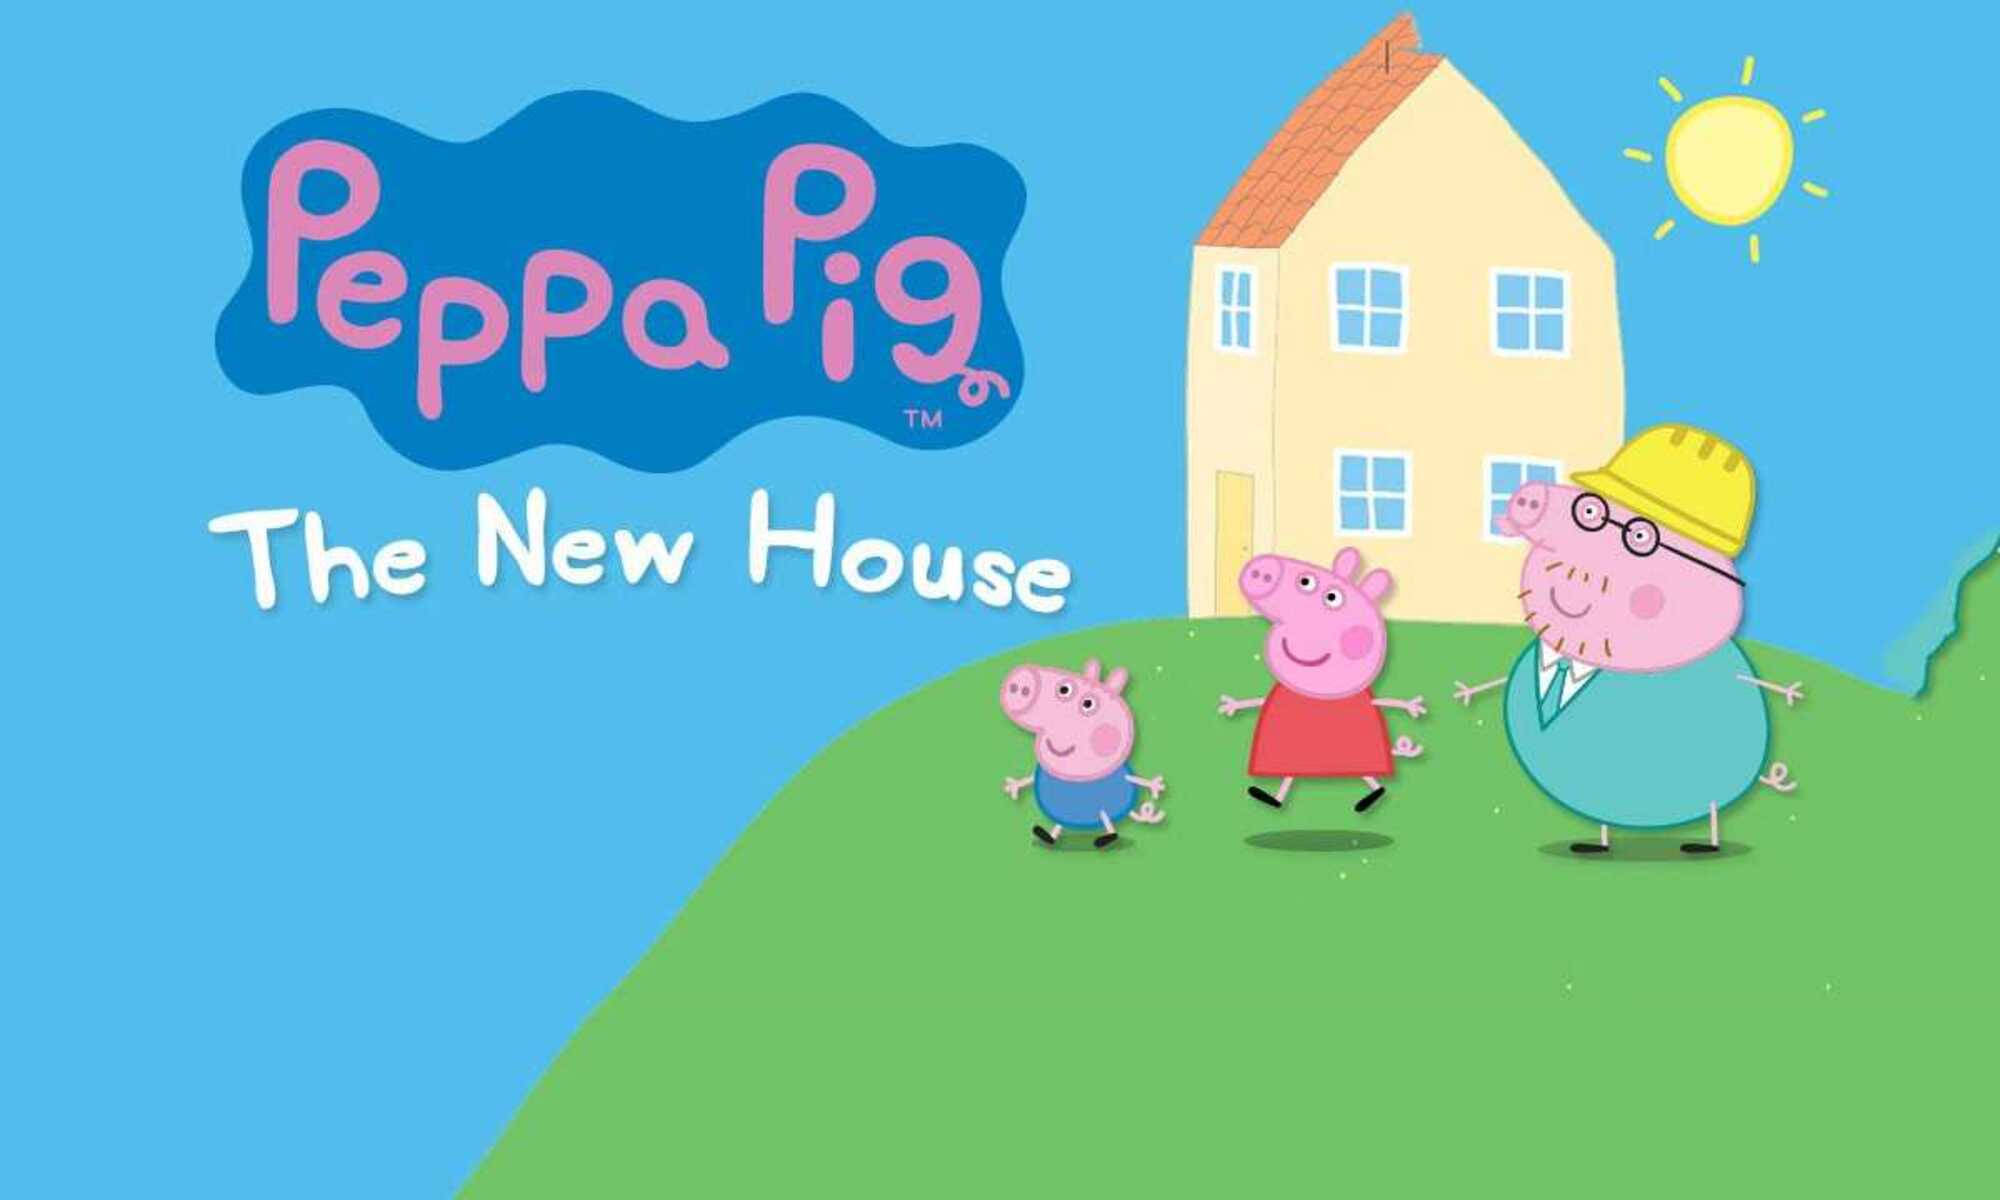 peppa pig house wallpaper creepy